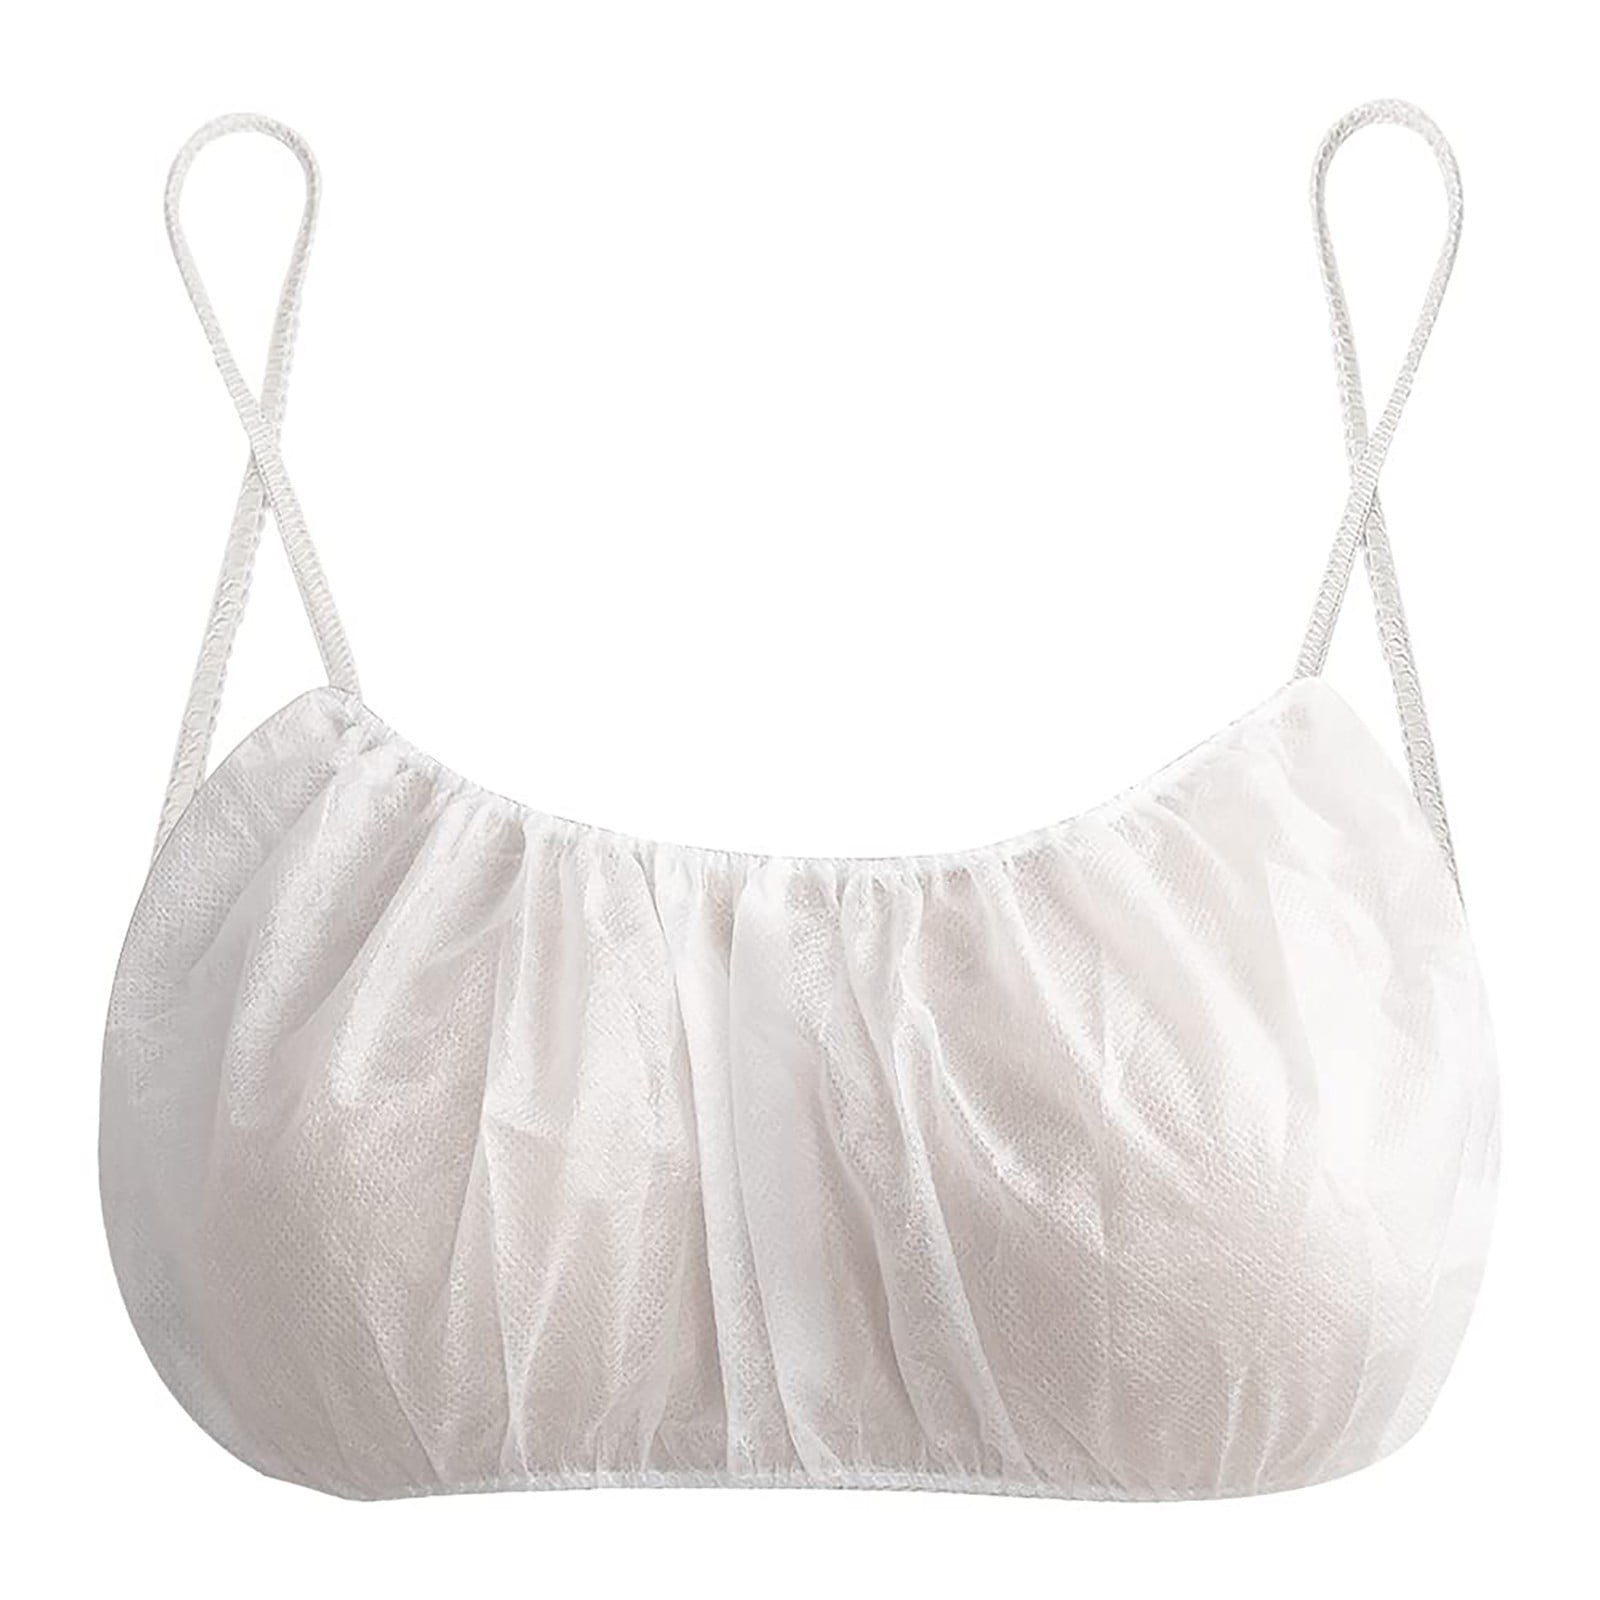 Pjtewawe travel equipment women's disposable bras disposable spa top  underwear brassieres tops 